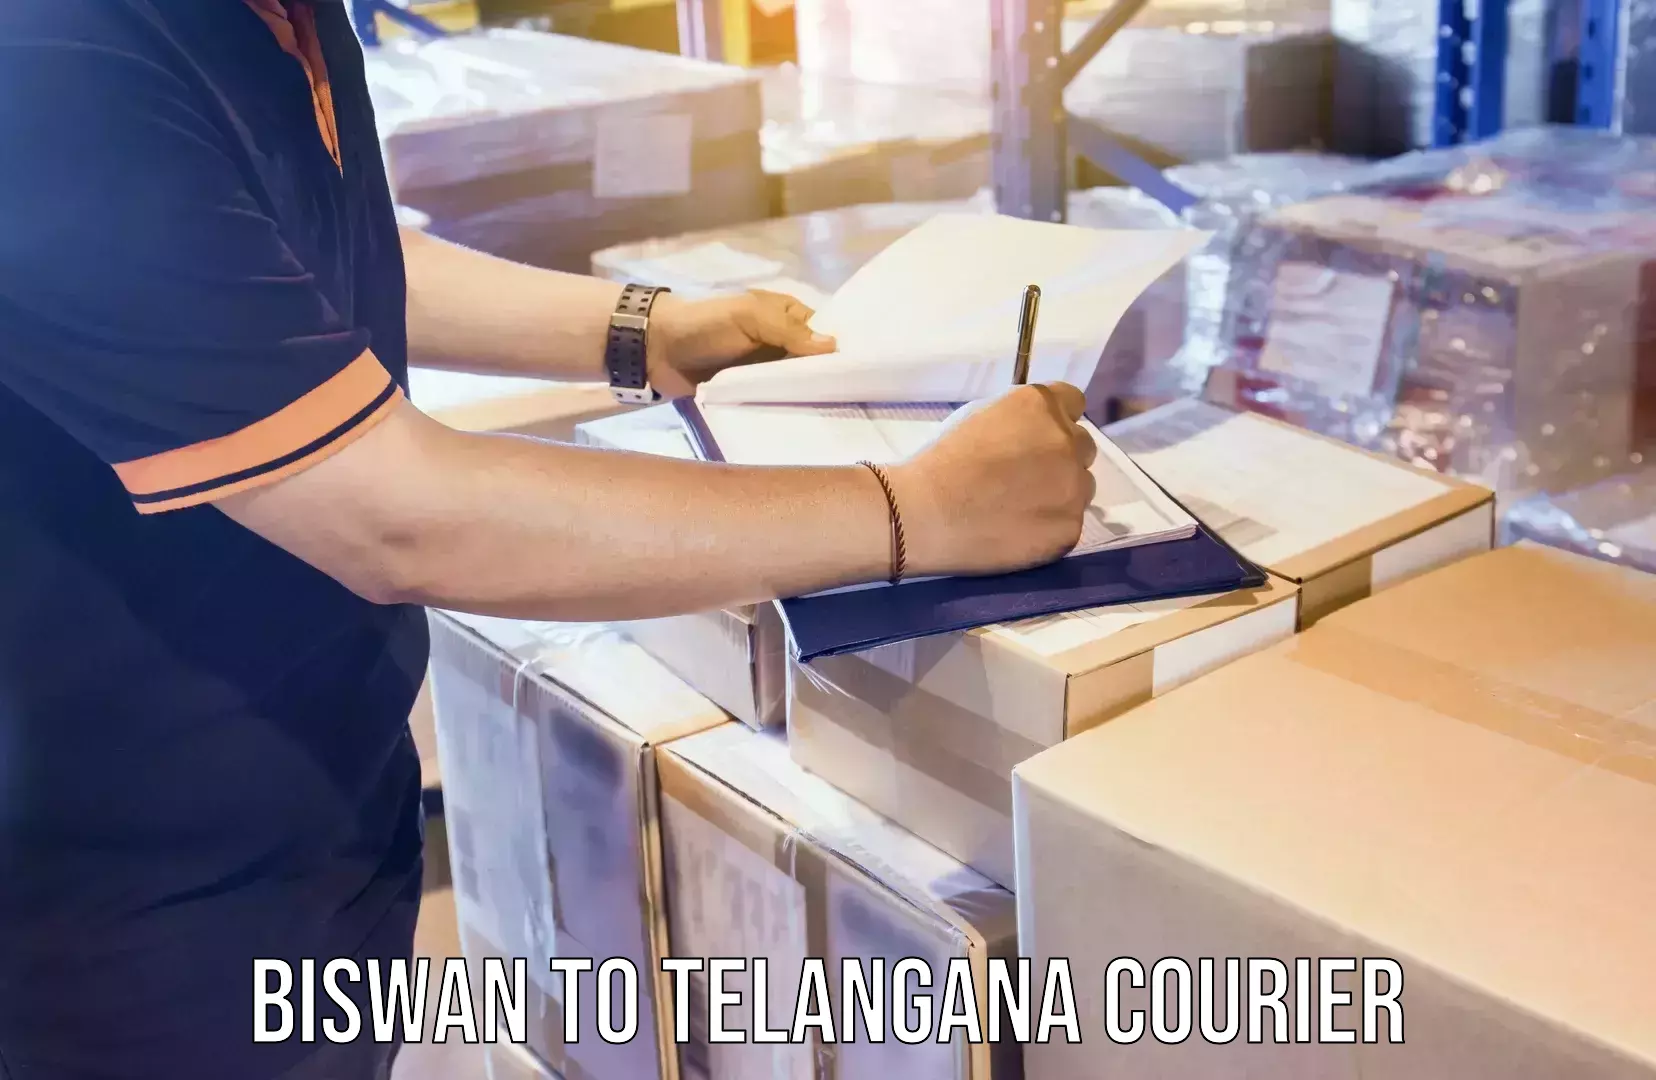 Courier service efficiency Biswan to Telangana